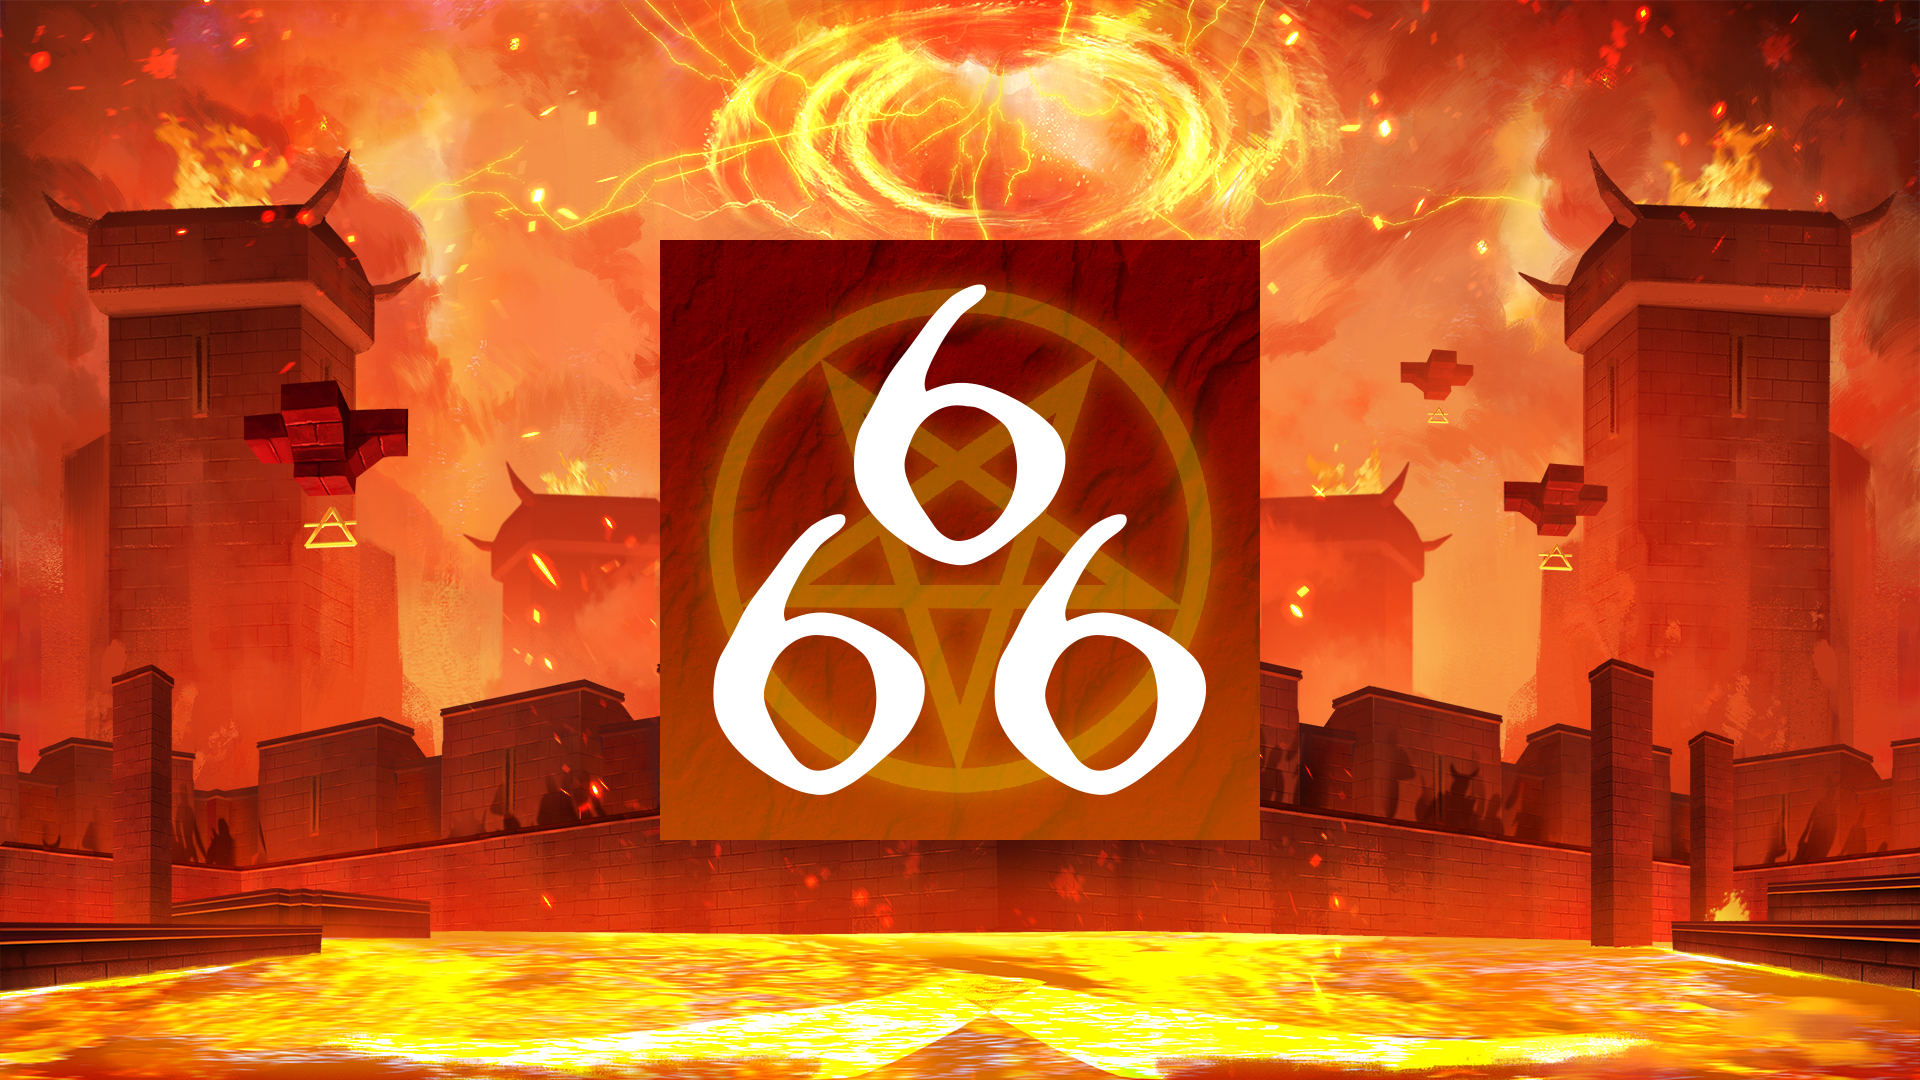 Icon for Killed 666 enemies